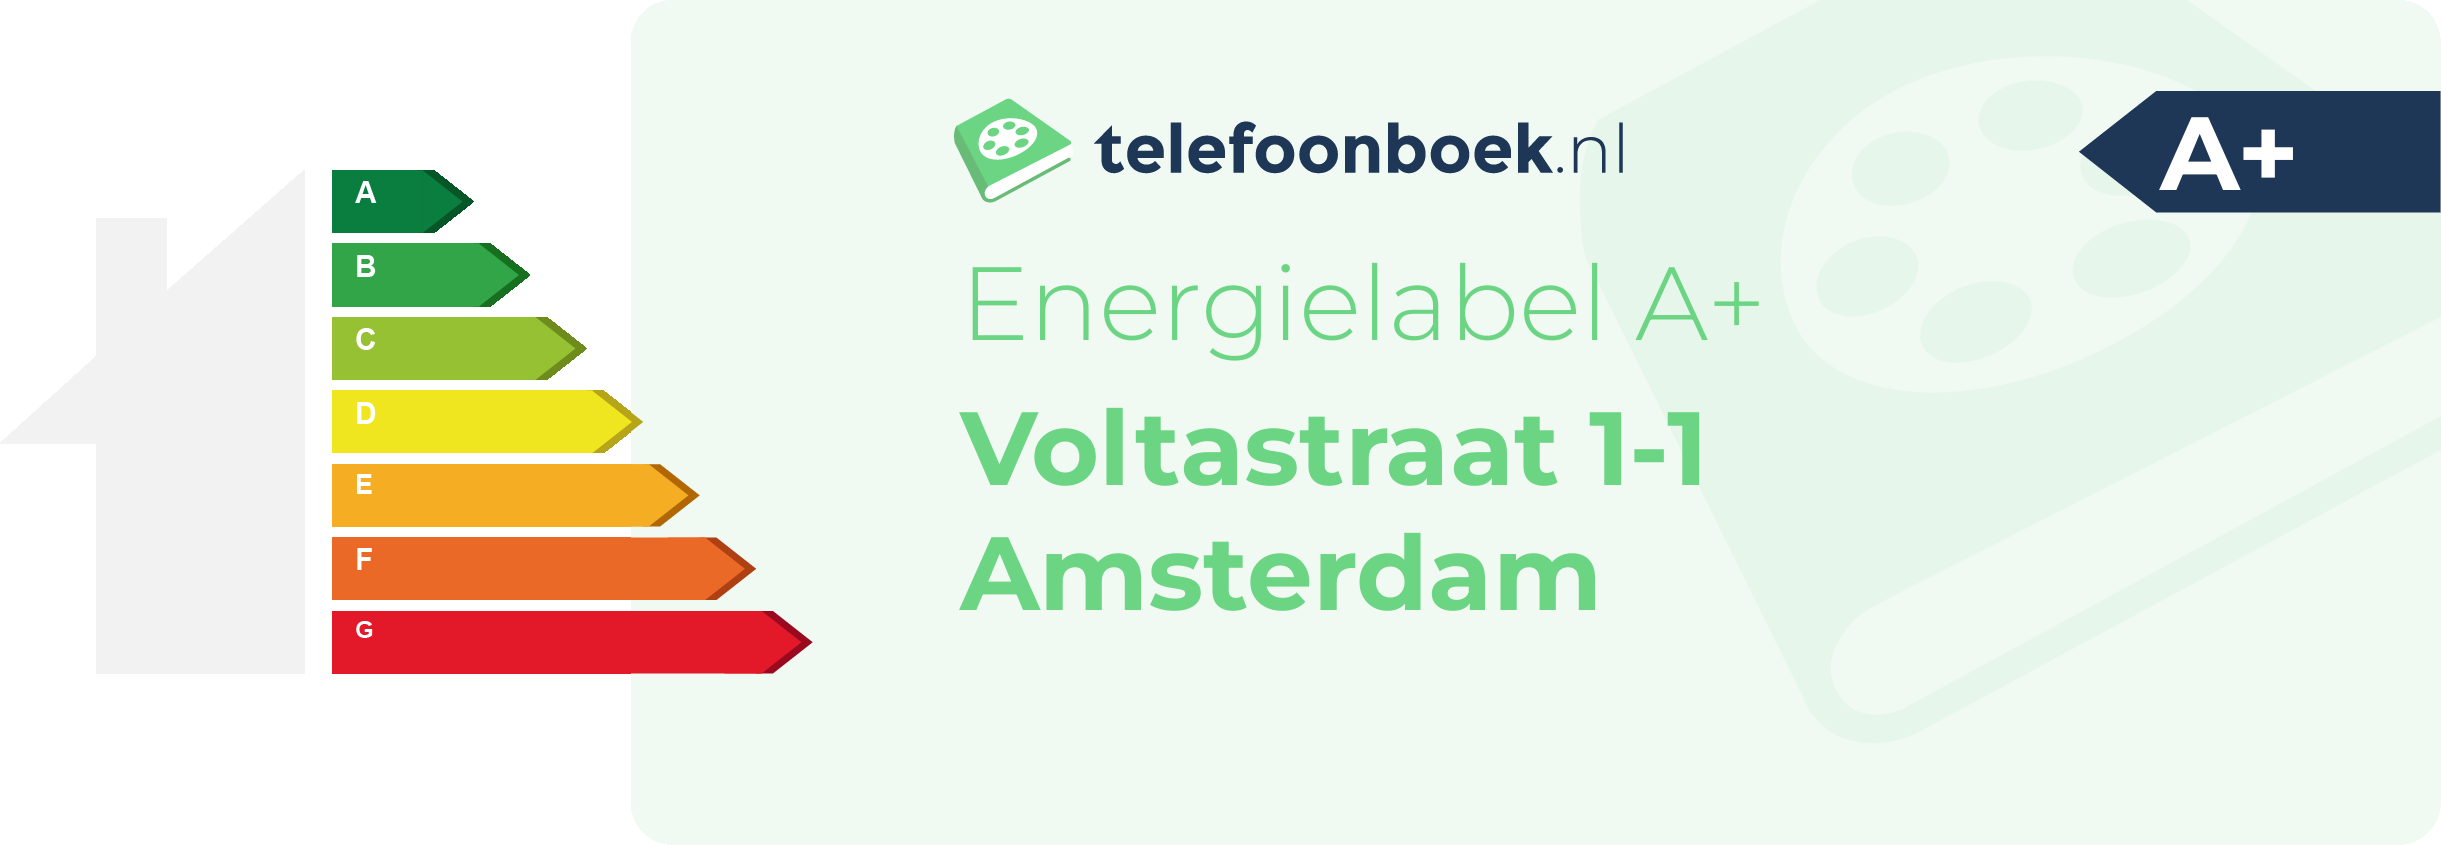 Energielabel Voltastraat 1-1 Amsterdam